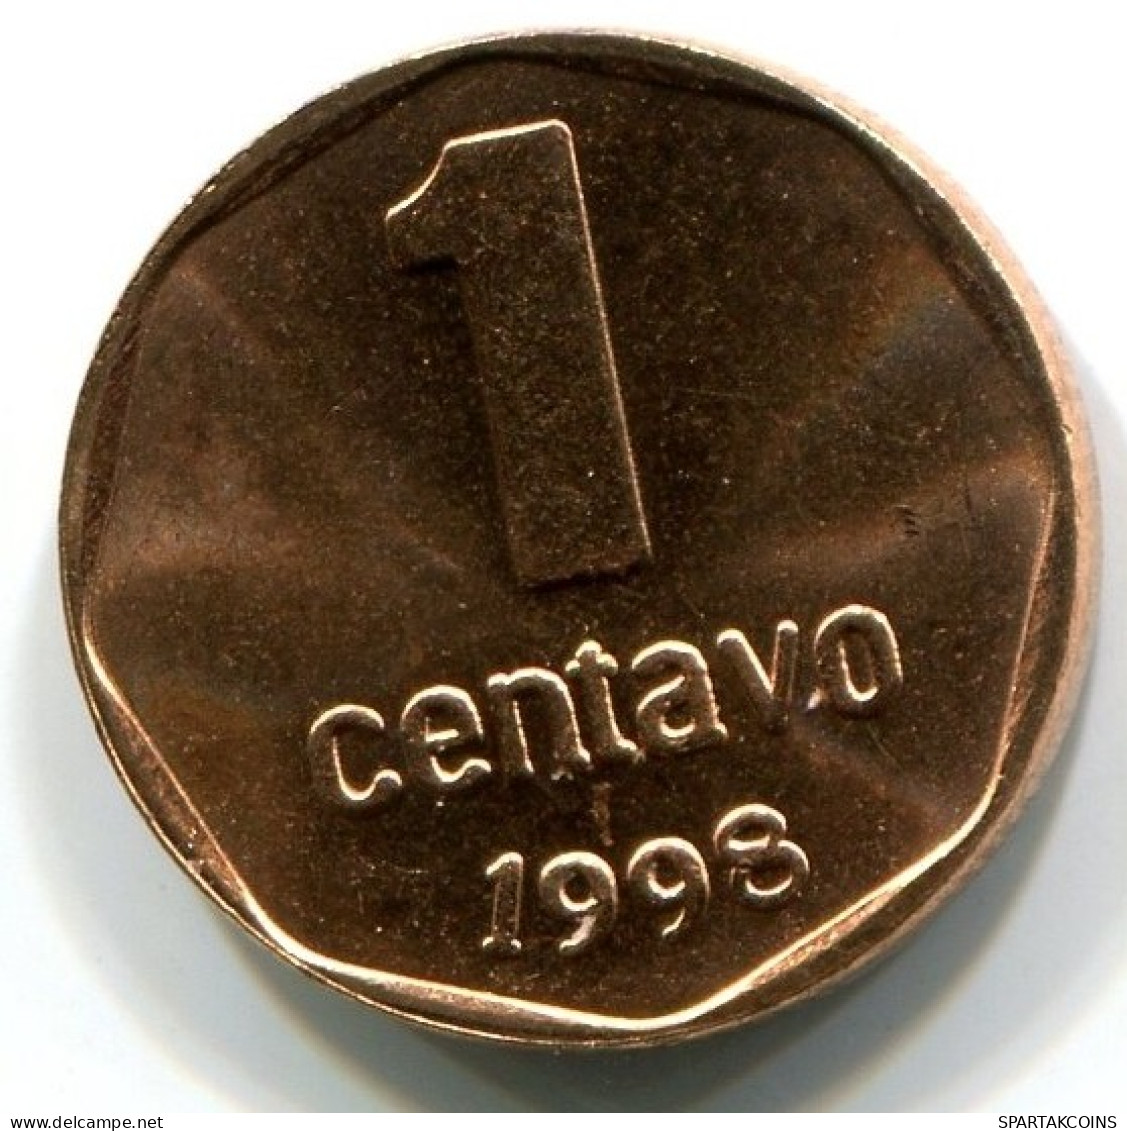 1 CENTAVO 1998 ARGENTINA Coin UNC #W10920.U.A - Argentina